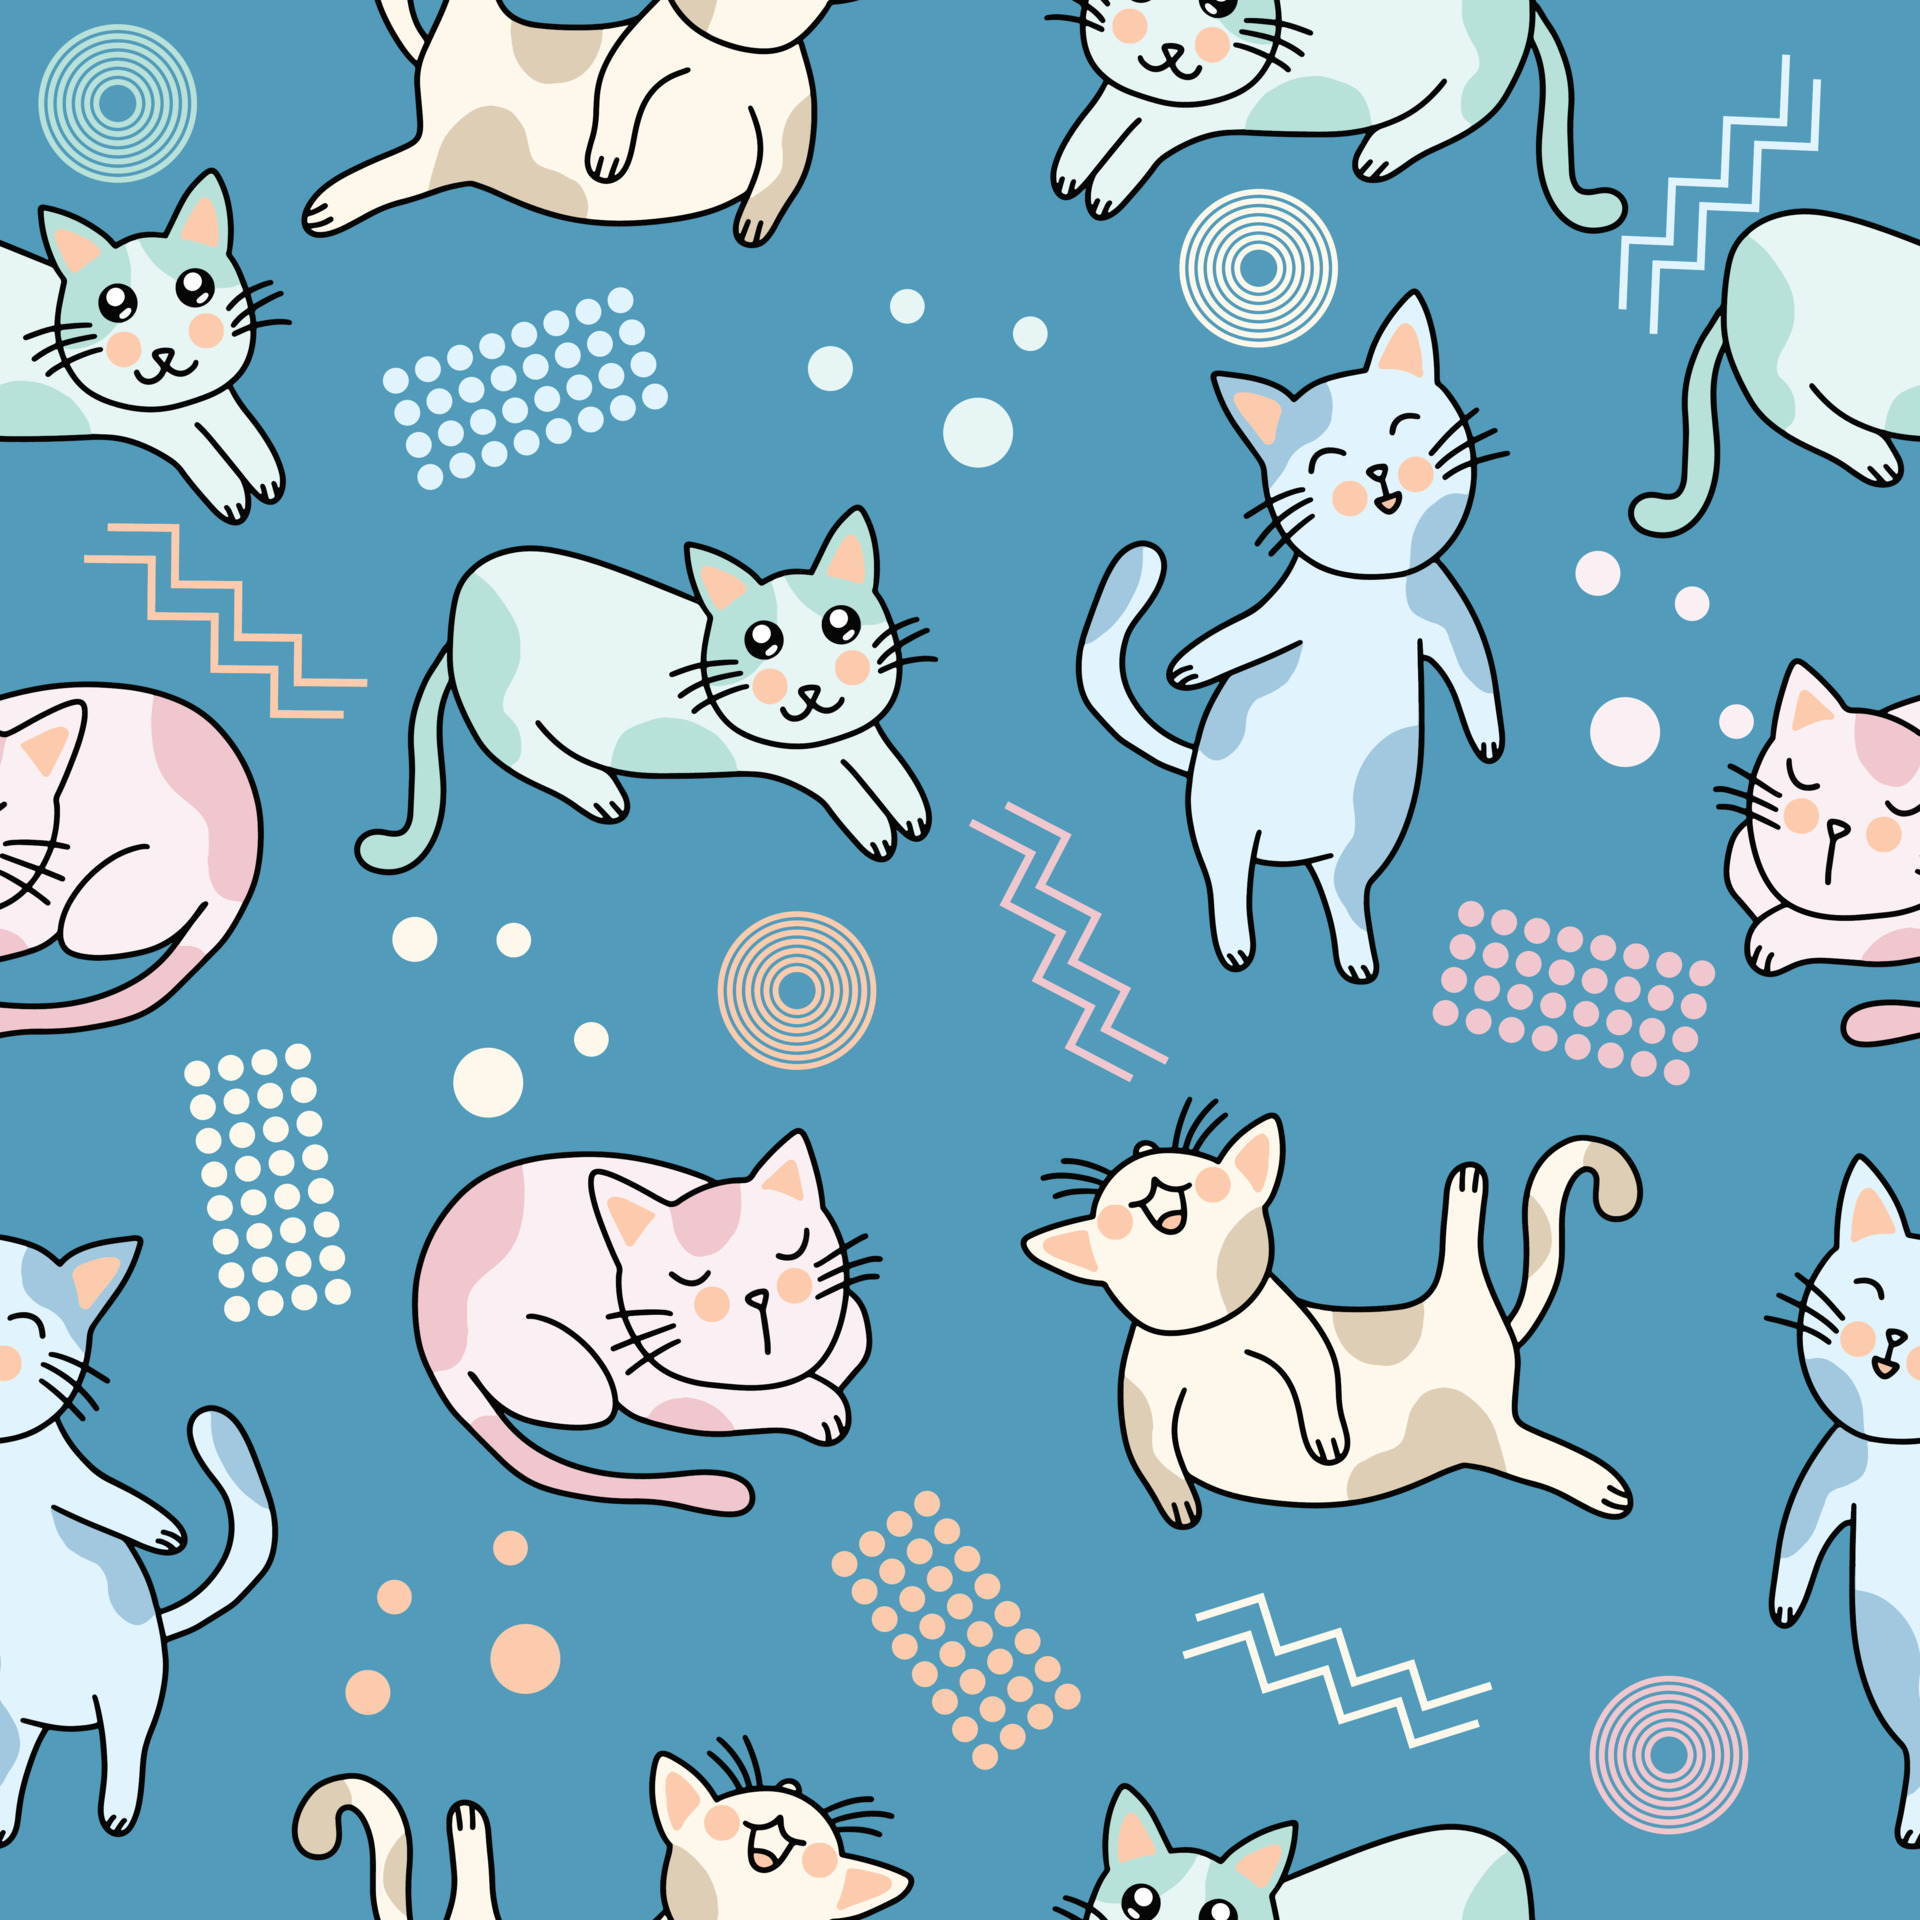 Premium Vector  Cute pretty cat pattern illustration design